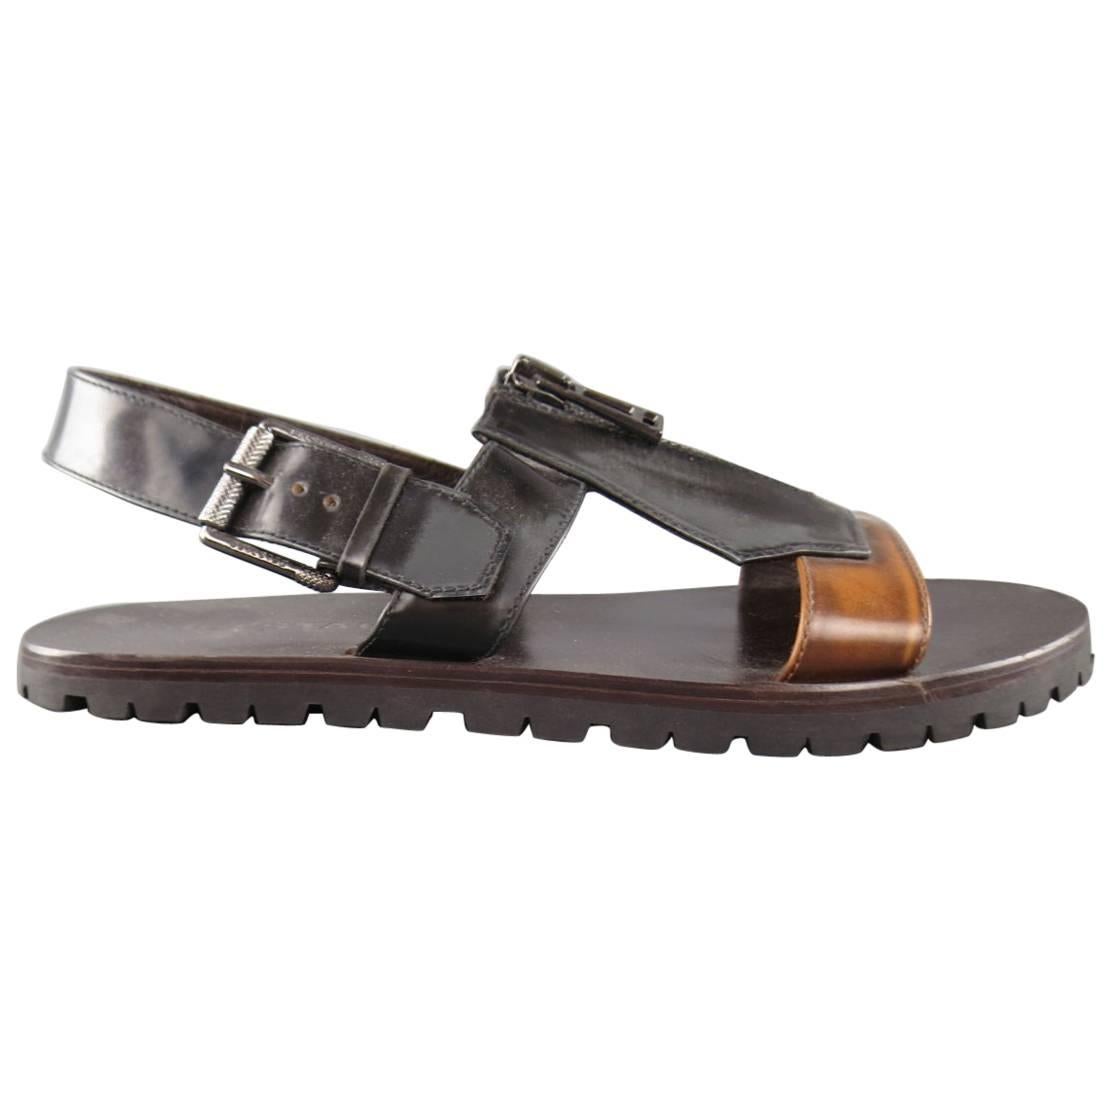 Men's BELSTAFF Size 9.5 Black & Brown Two Toned Patent Leather Zip Sandals